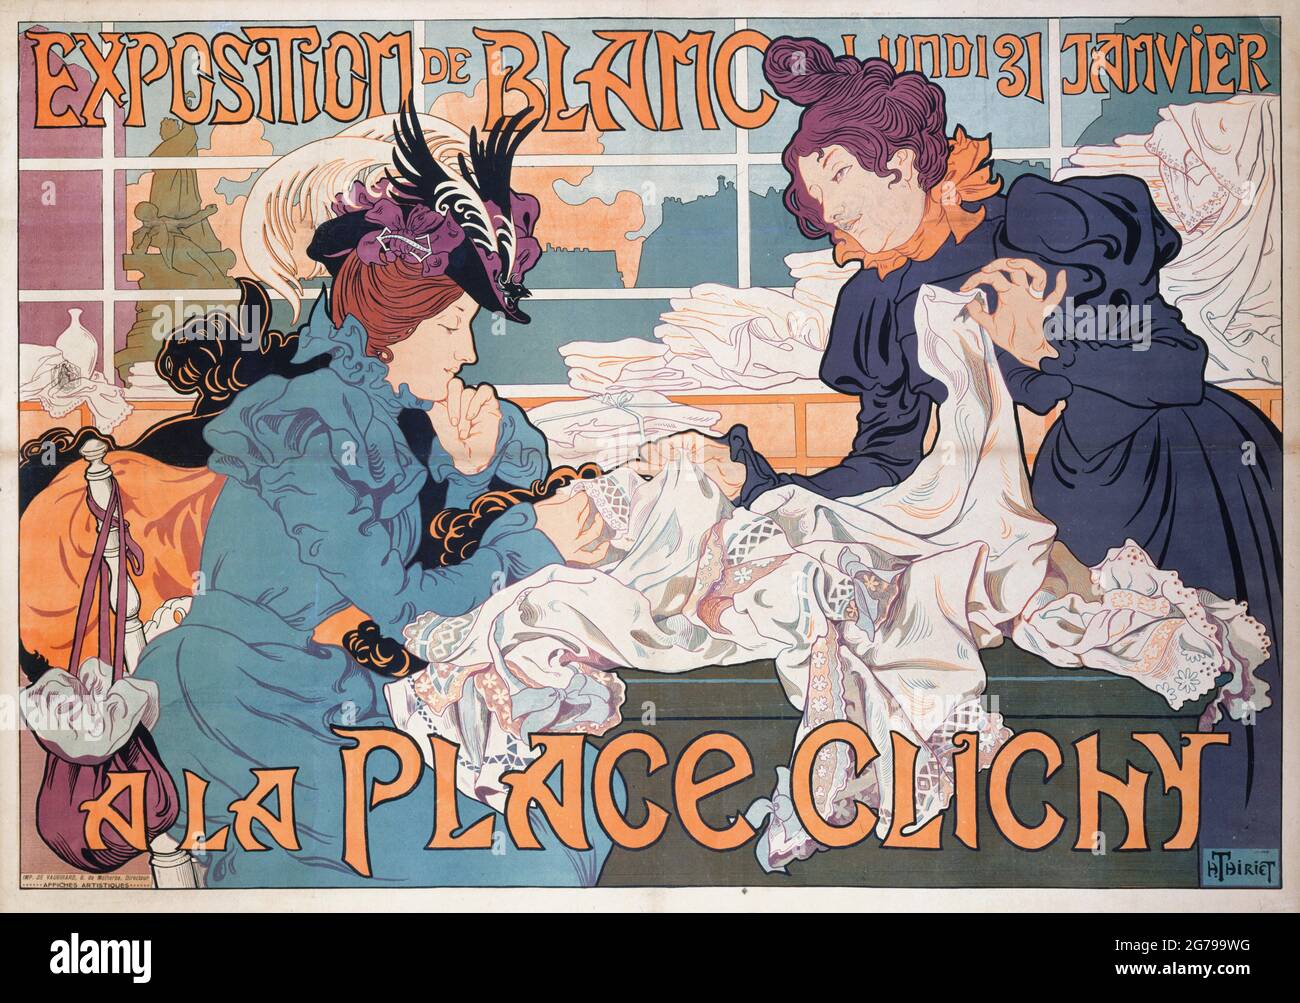 Exposition de Blanc a la Place Clichy. Museum: PRIVATE SAMMLUNG. Autor: HENRI THIRIET. Stockfoto